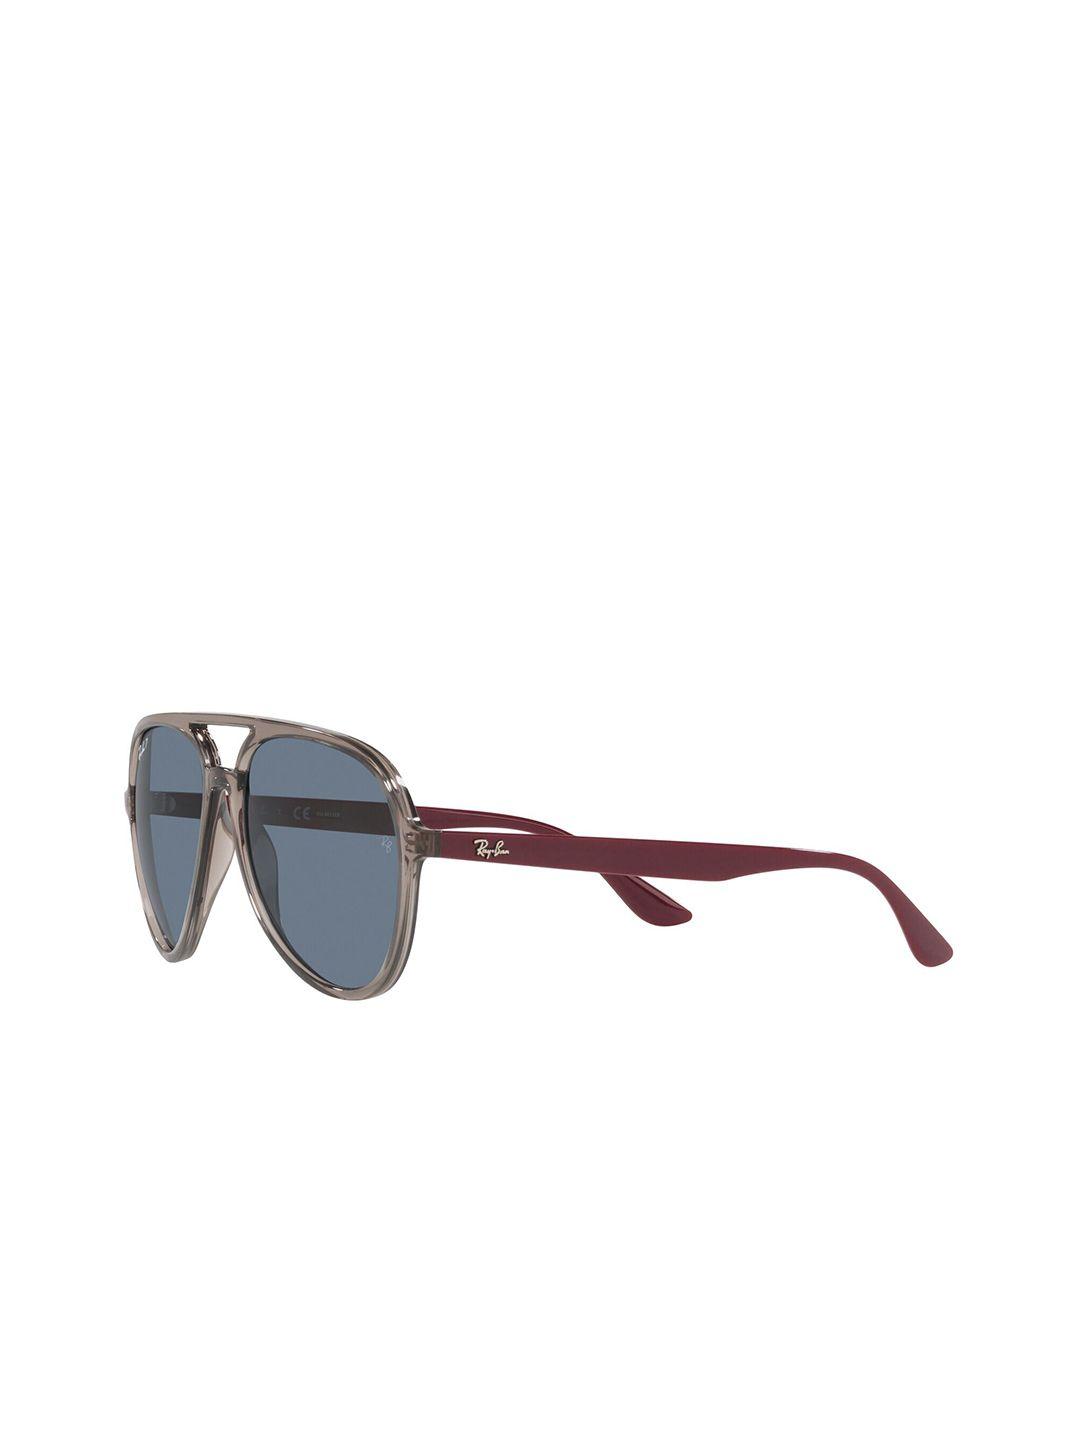 ray-ban full rim aviator sunglasses with polarised lens 8056597626606